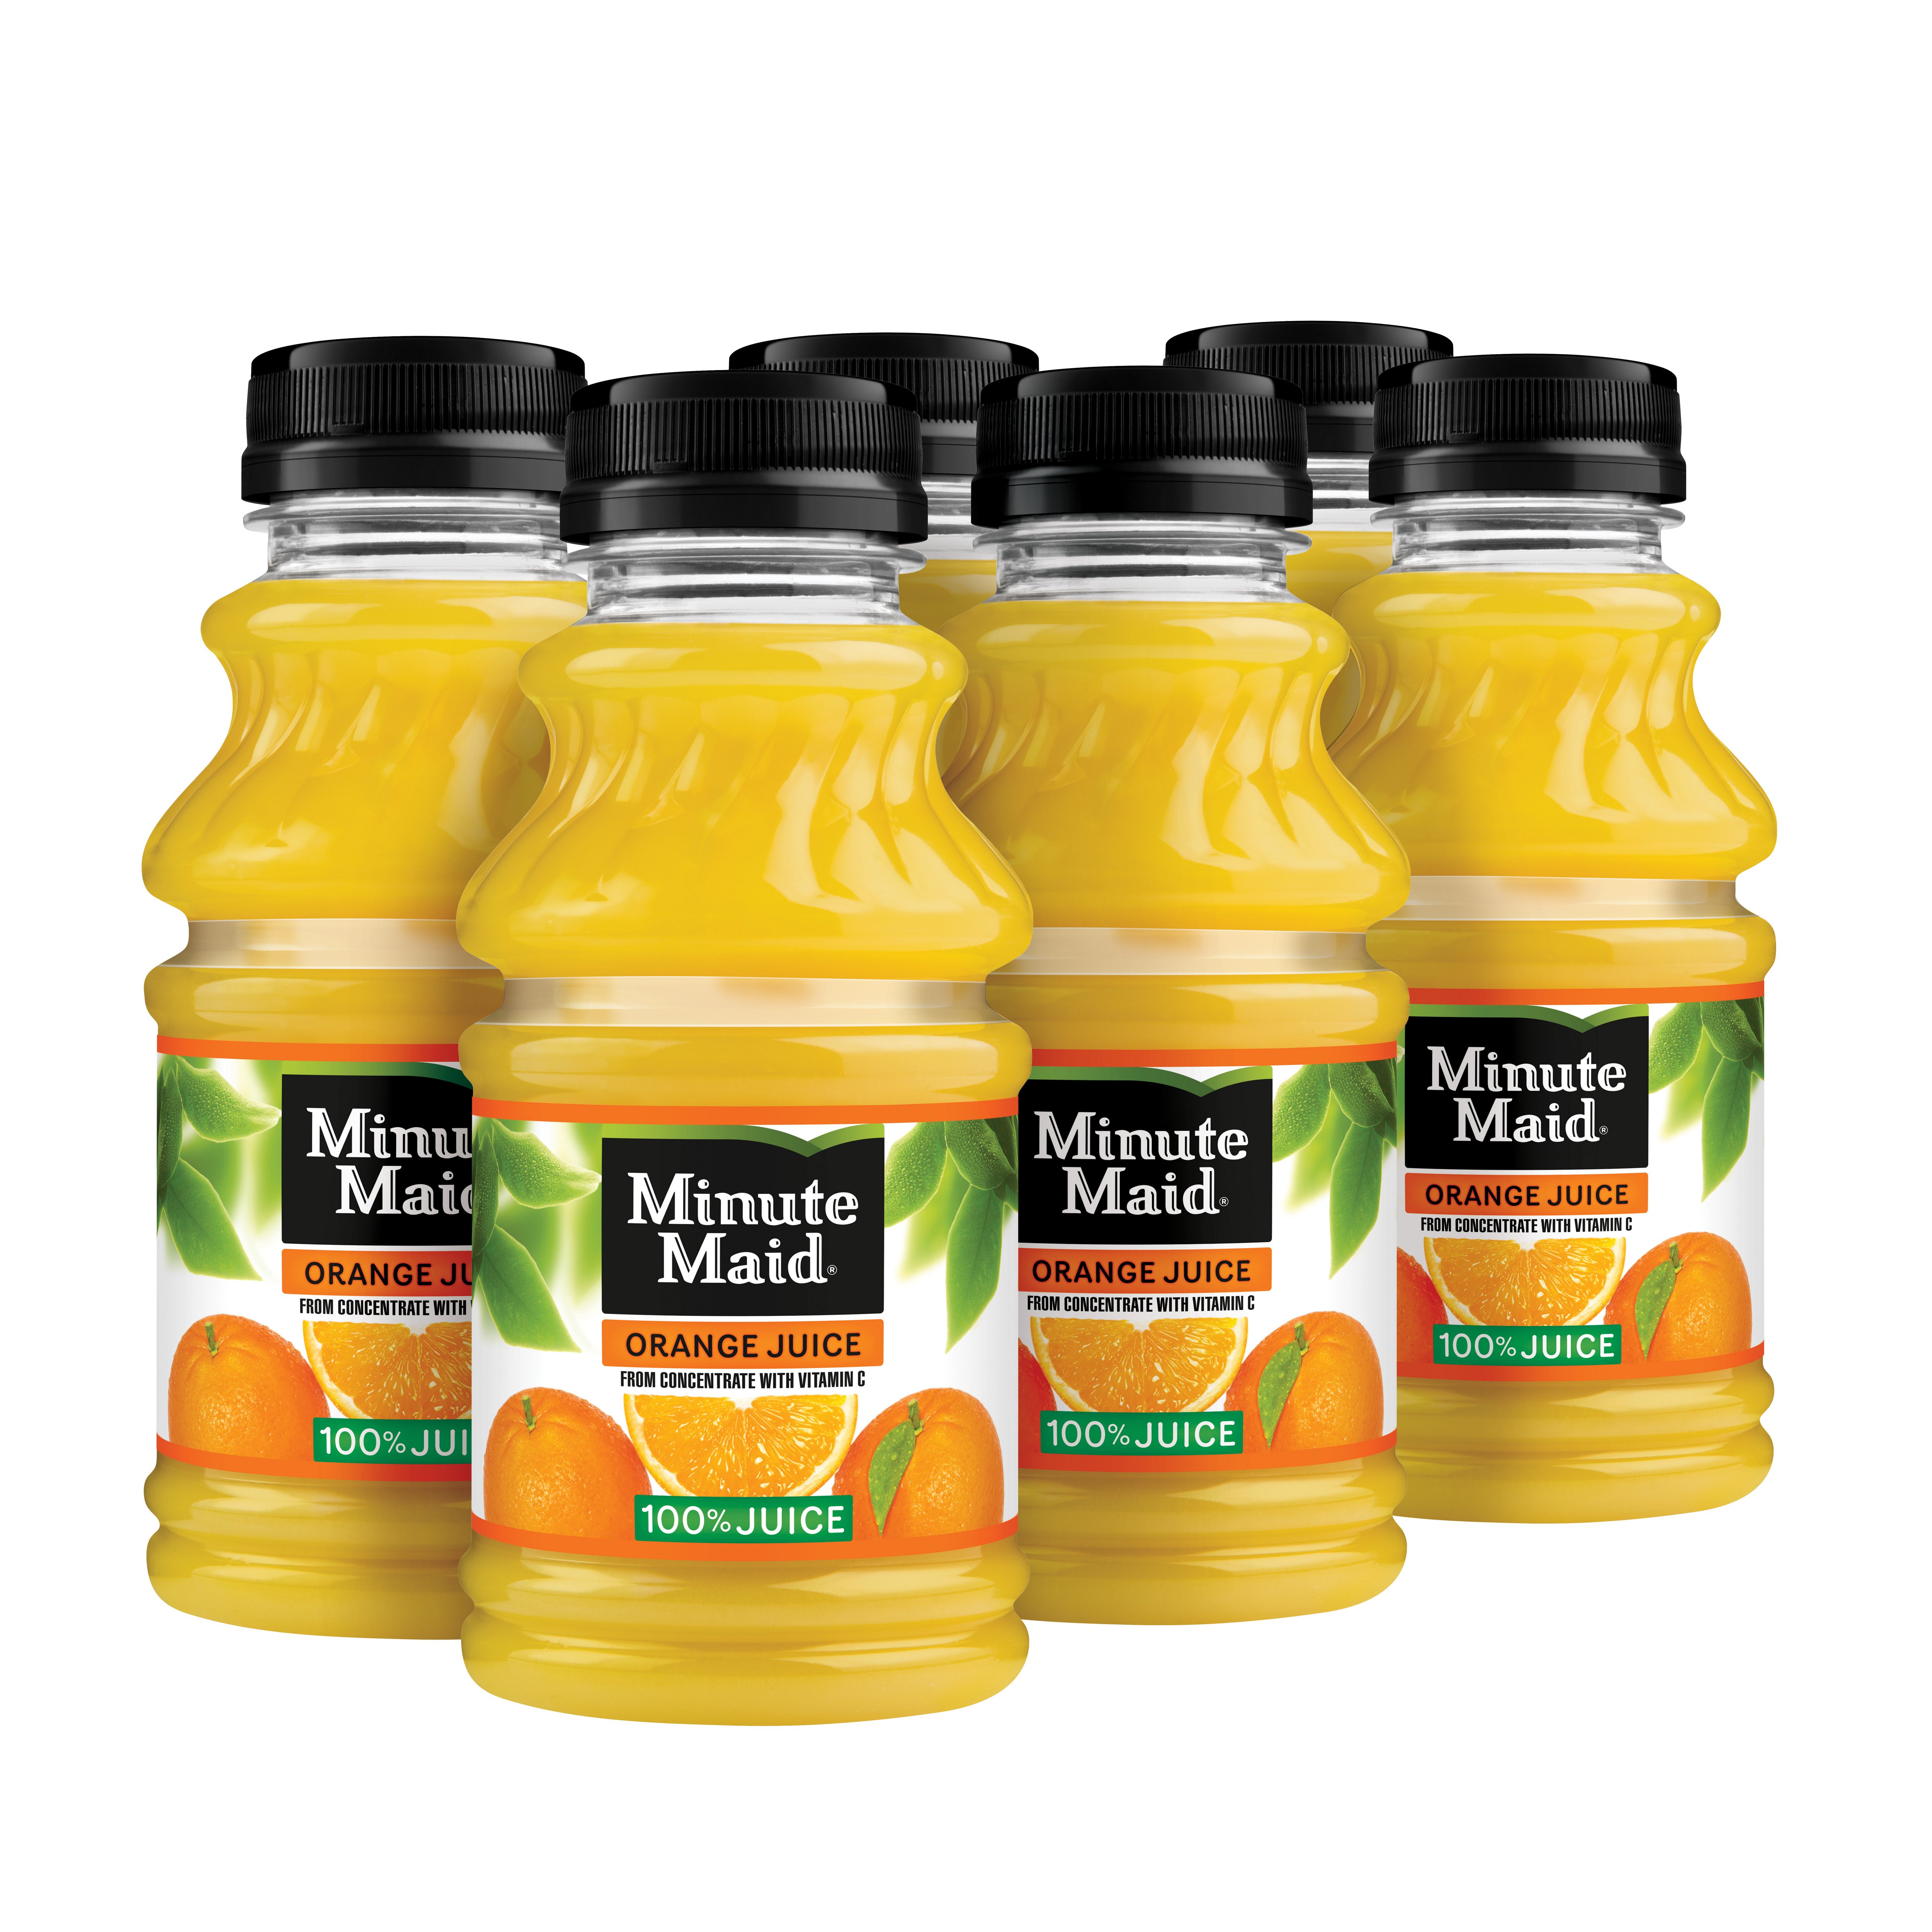 42 Minute Maid Orange Juice Label Central Label